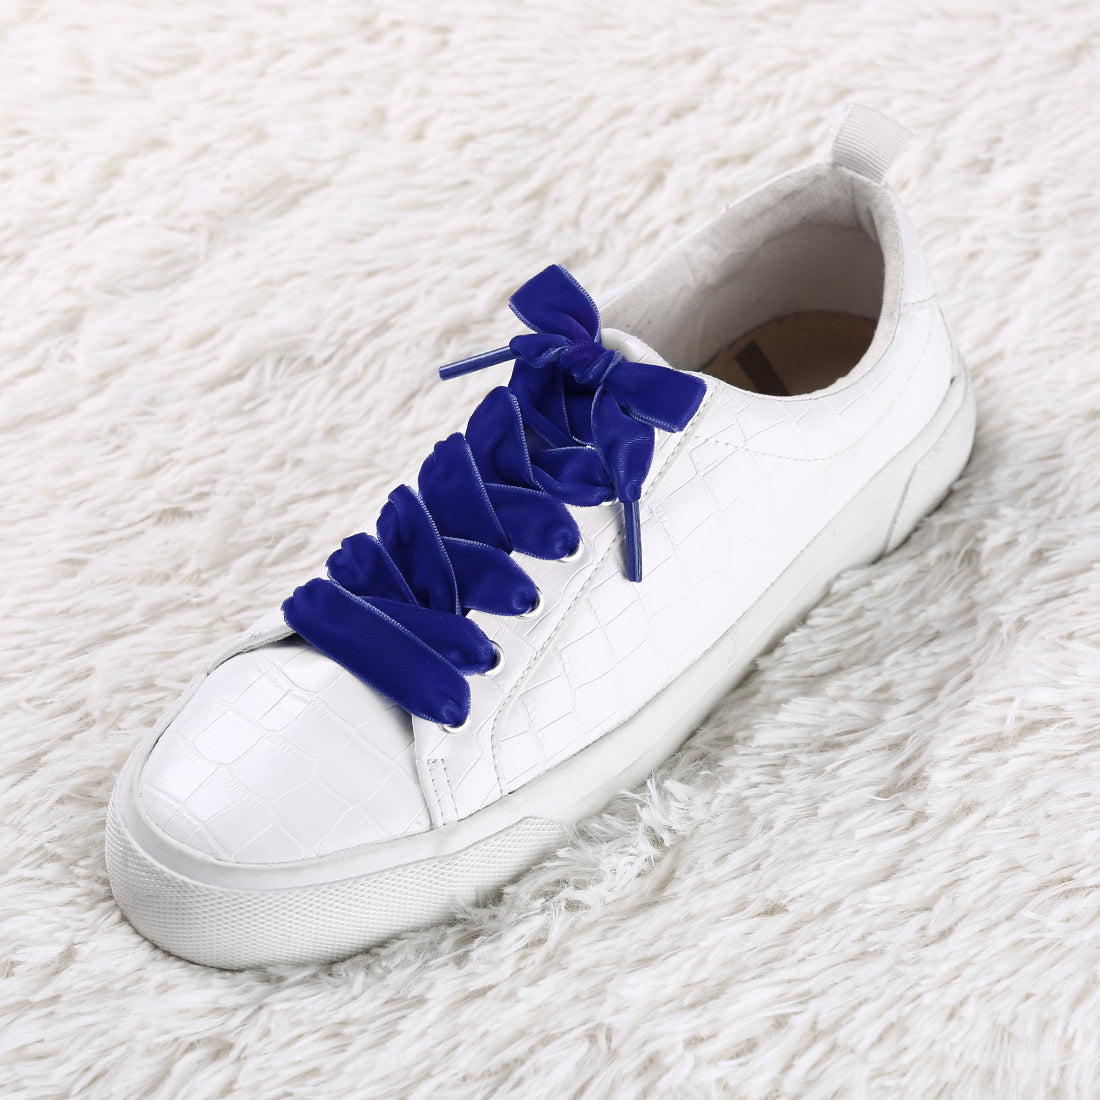 Allegra K Velvet Shoelaces Ribbon Strings for Sneakers Shoe Laces